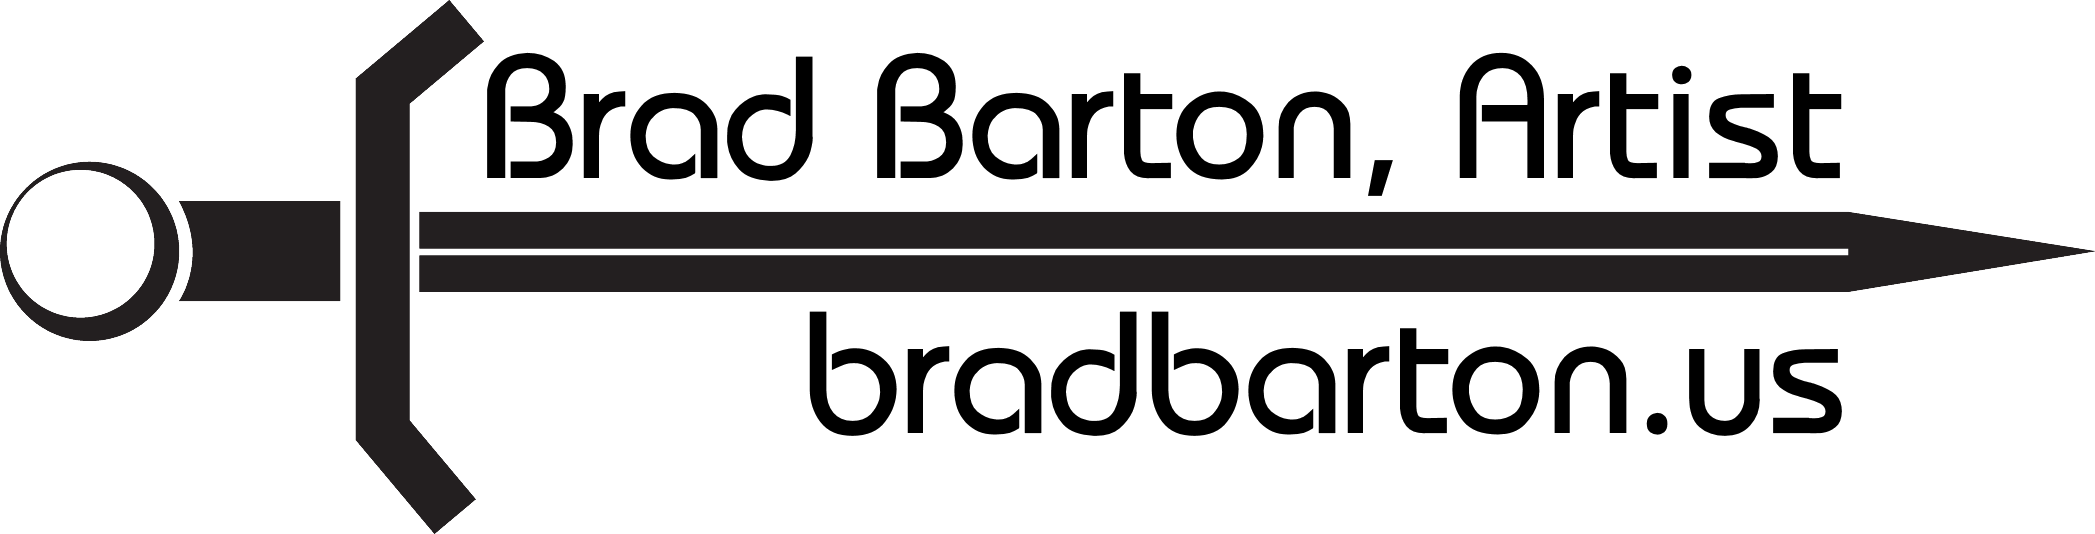 Brad Barton - Website